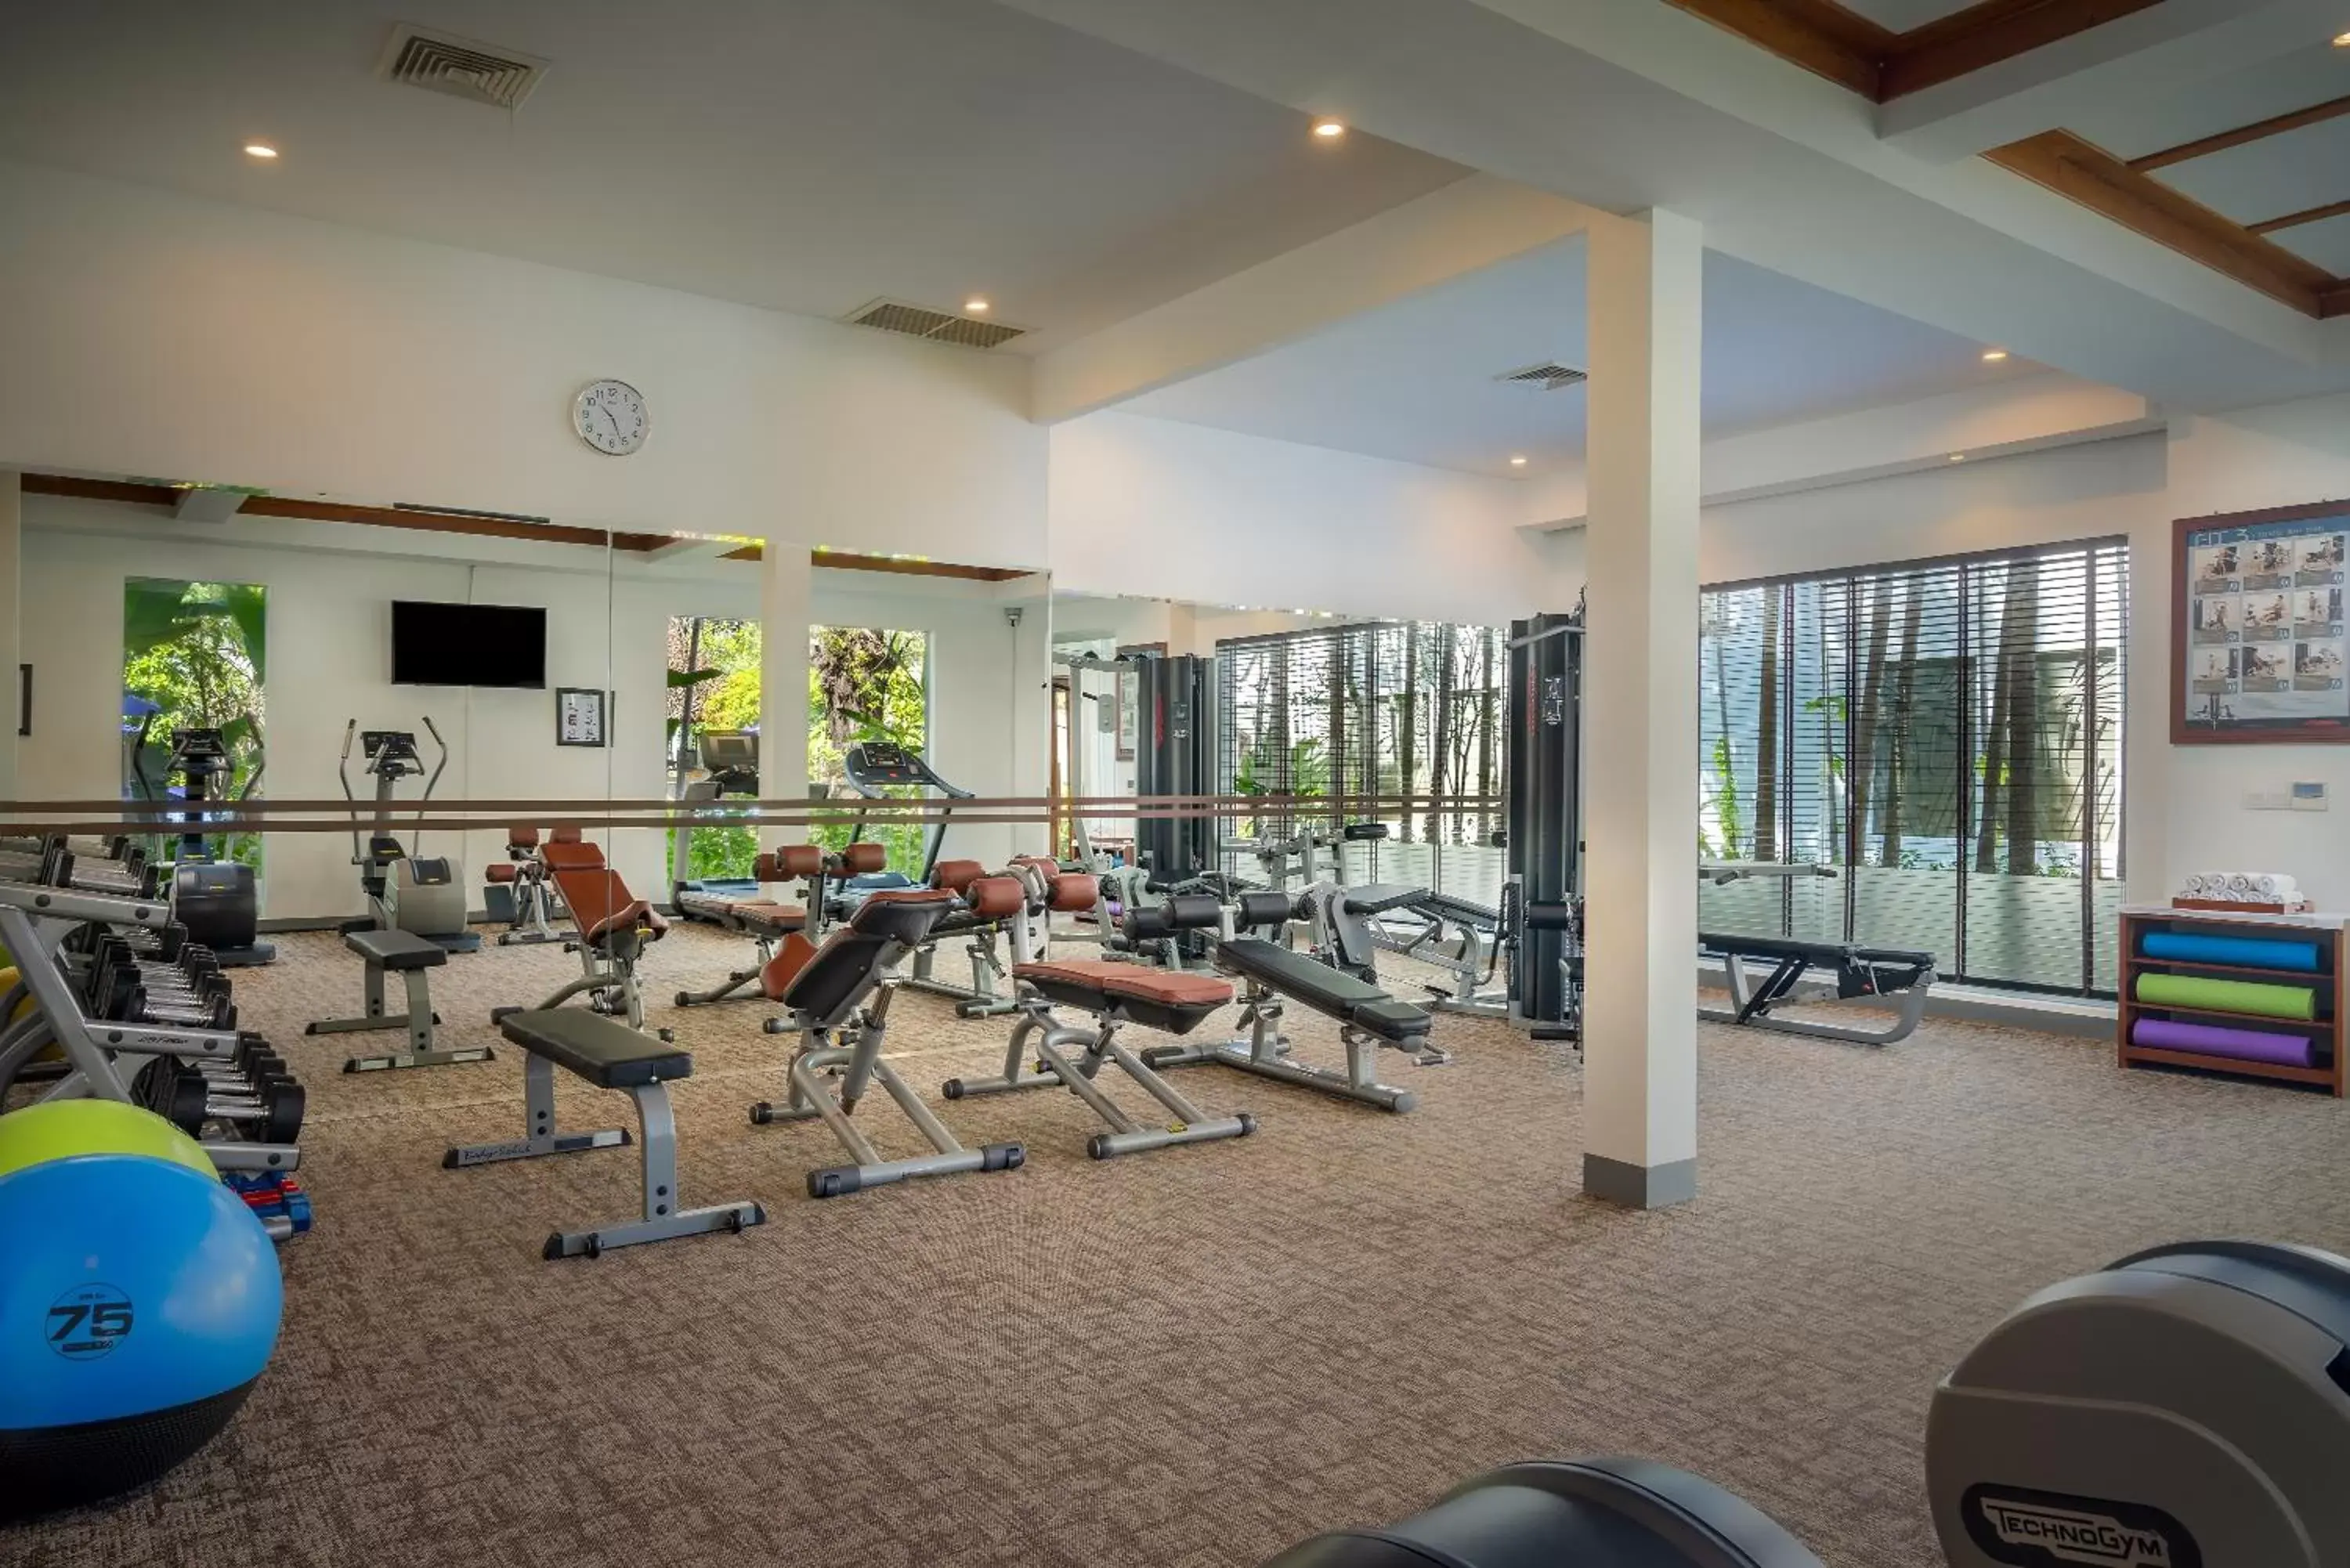 Fitness centre/facilities, Fitness Center/Facilities in Koulen Hotel